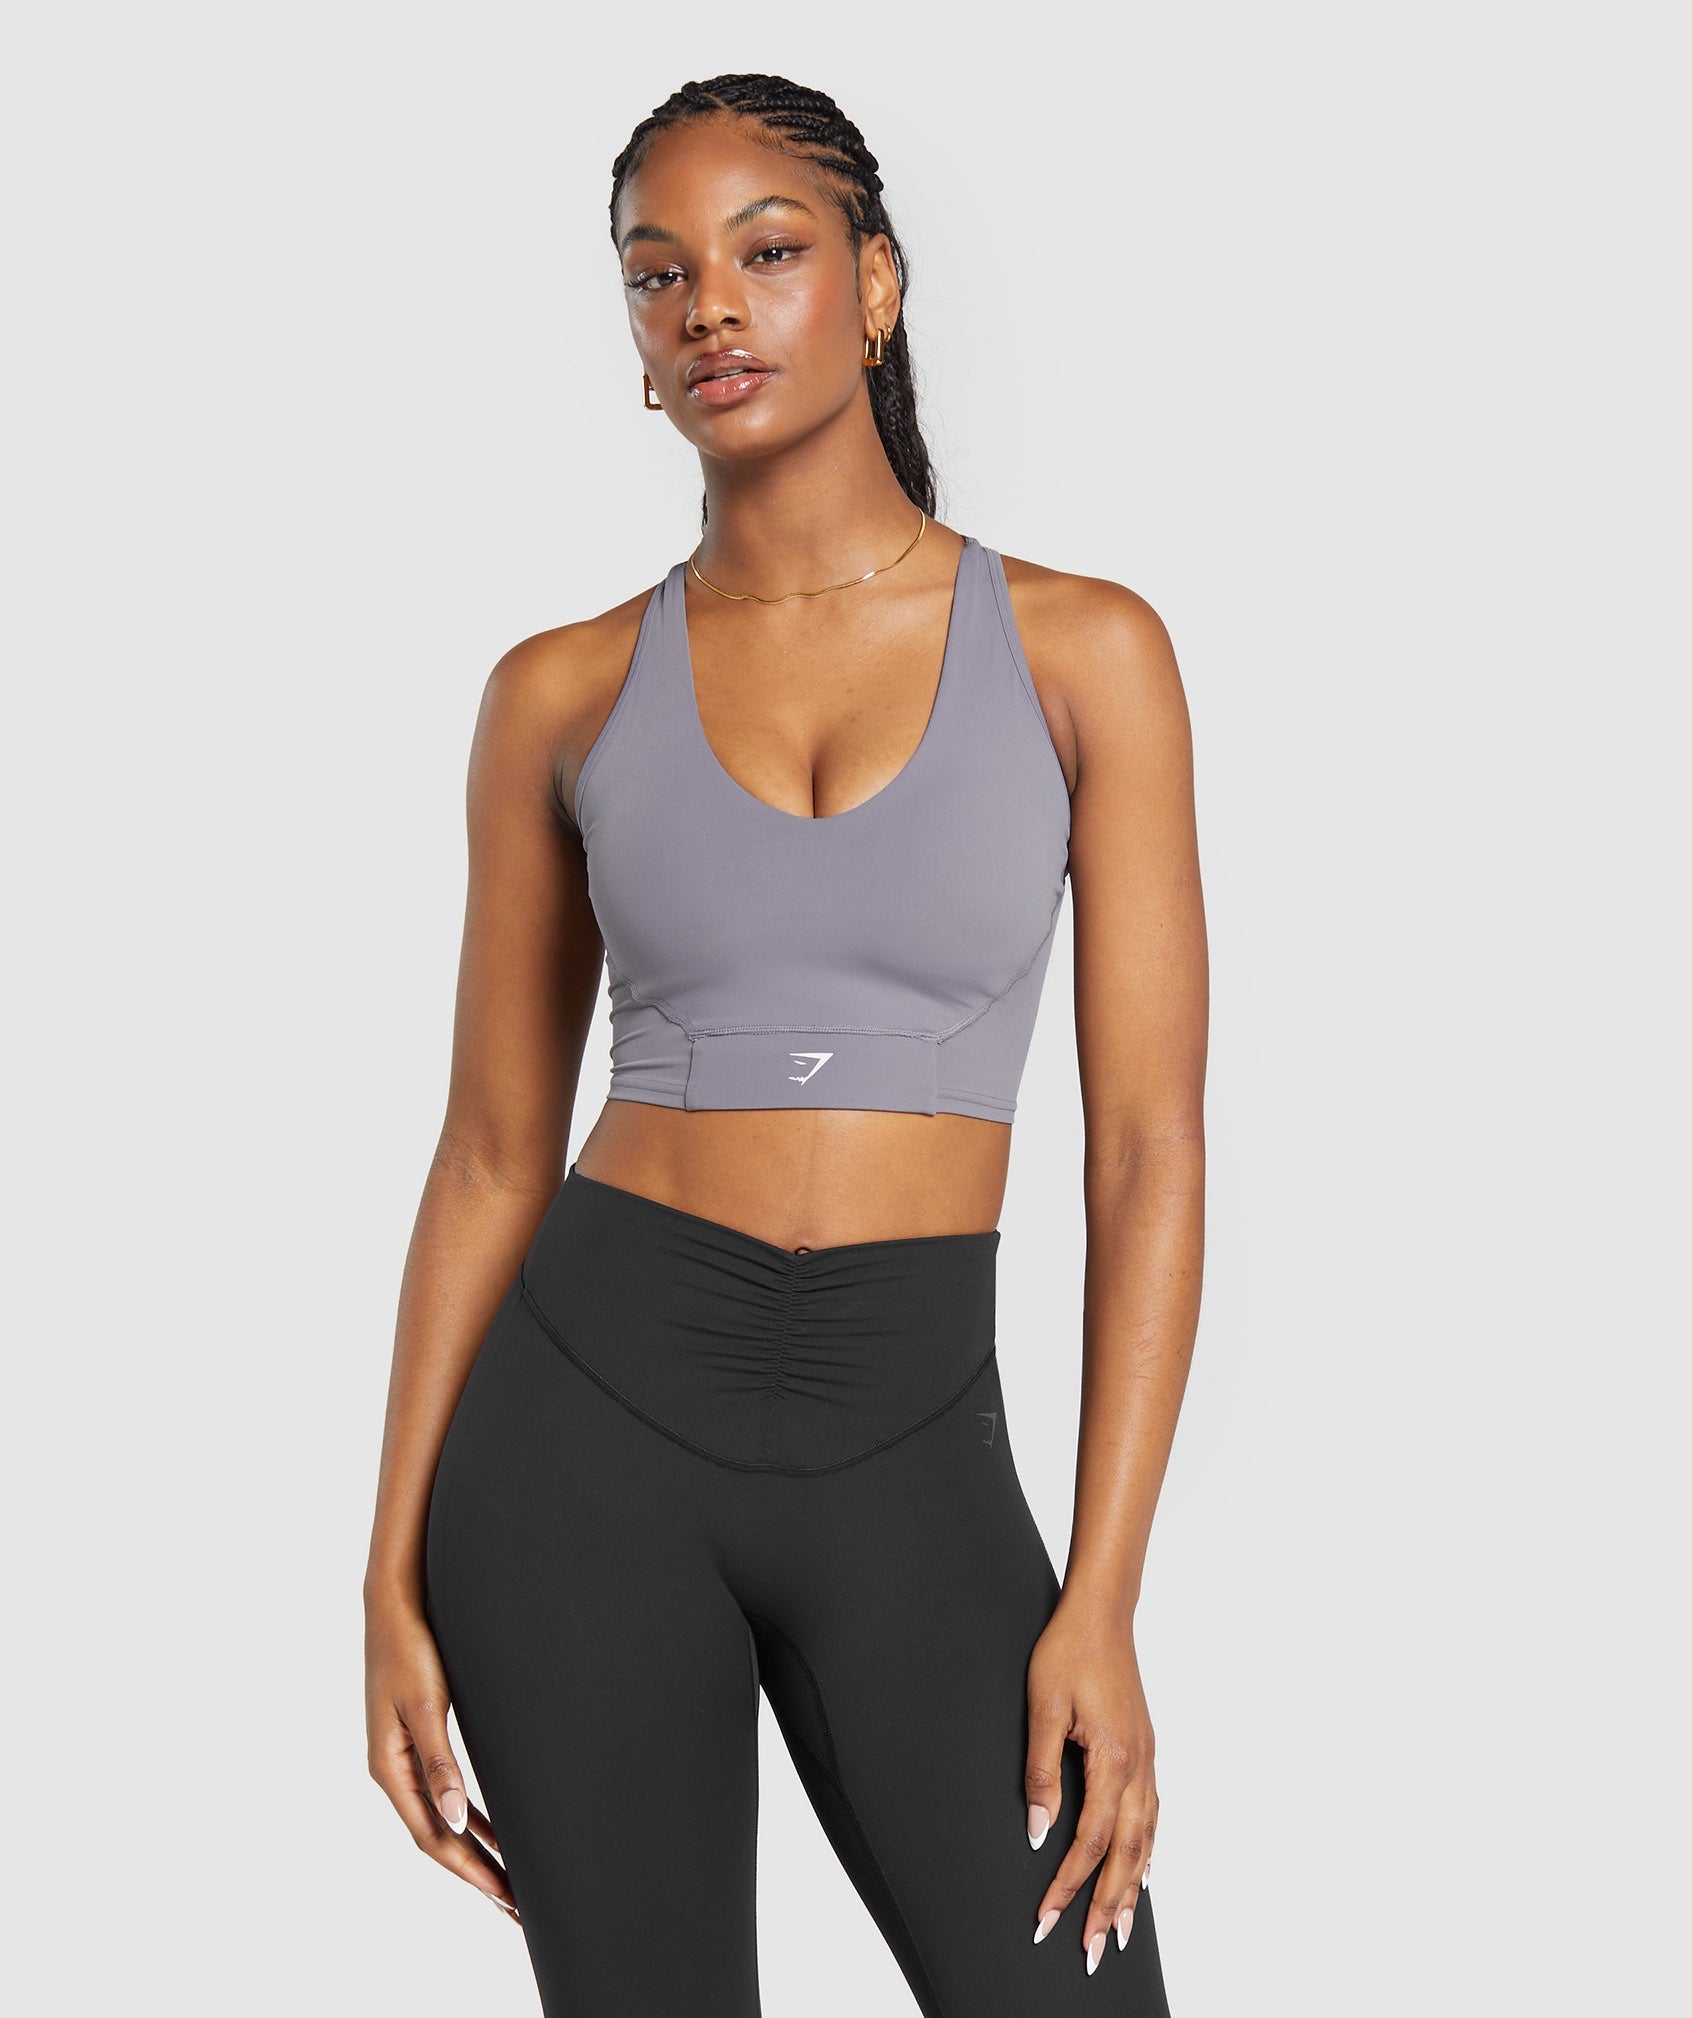 Women's Gym & Workout Shirts & Tops - Gymshark